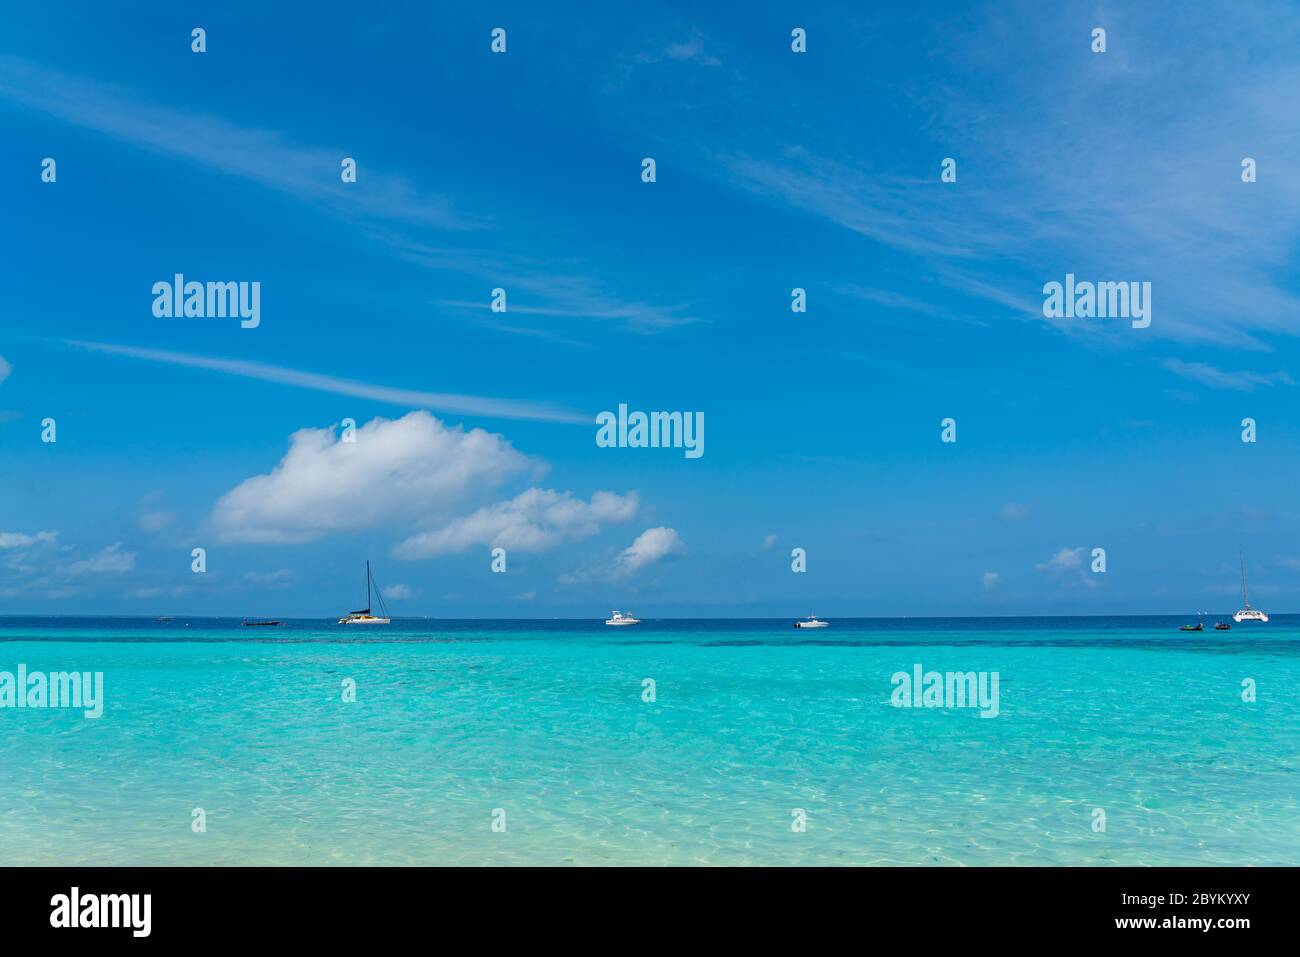 Boats on turquoise Ocean with White Sand blue Sky at Zanzibar Island, Tanzania Stock Photo